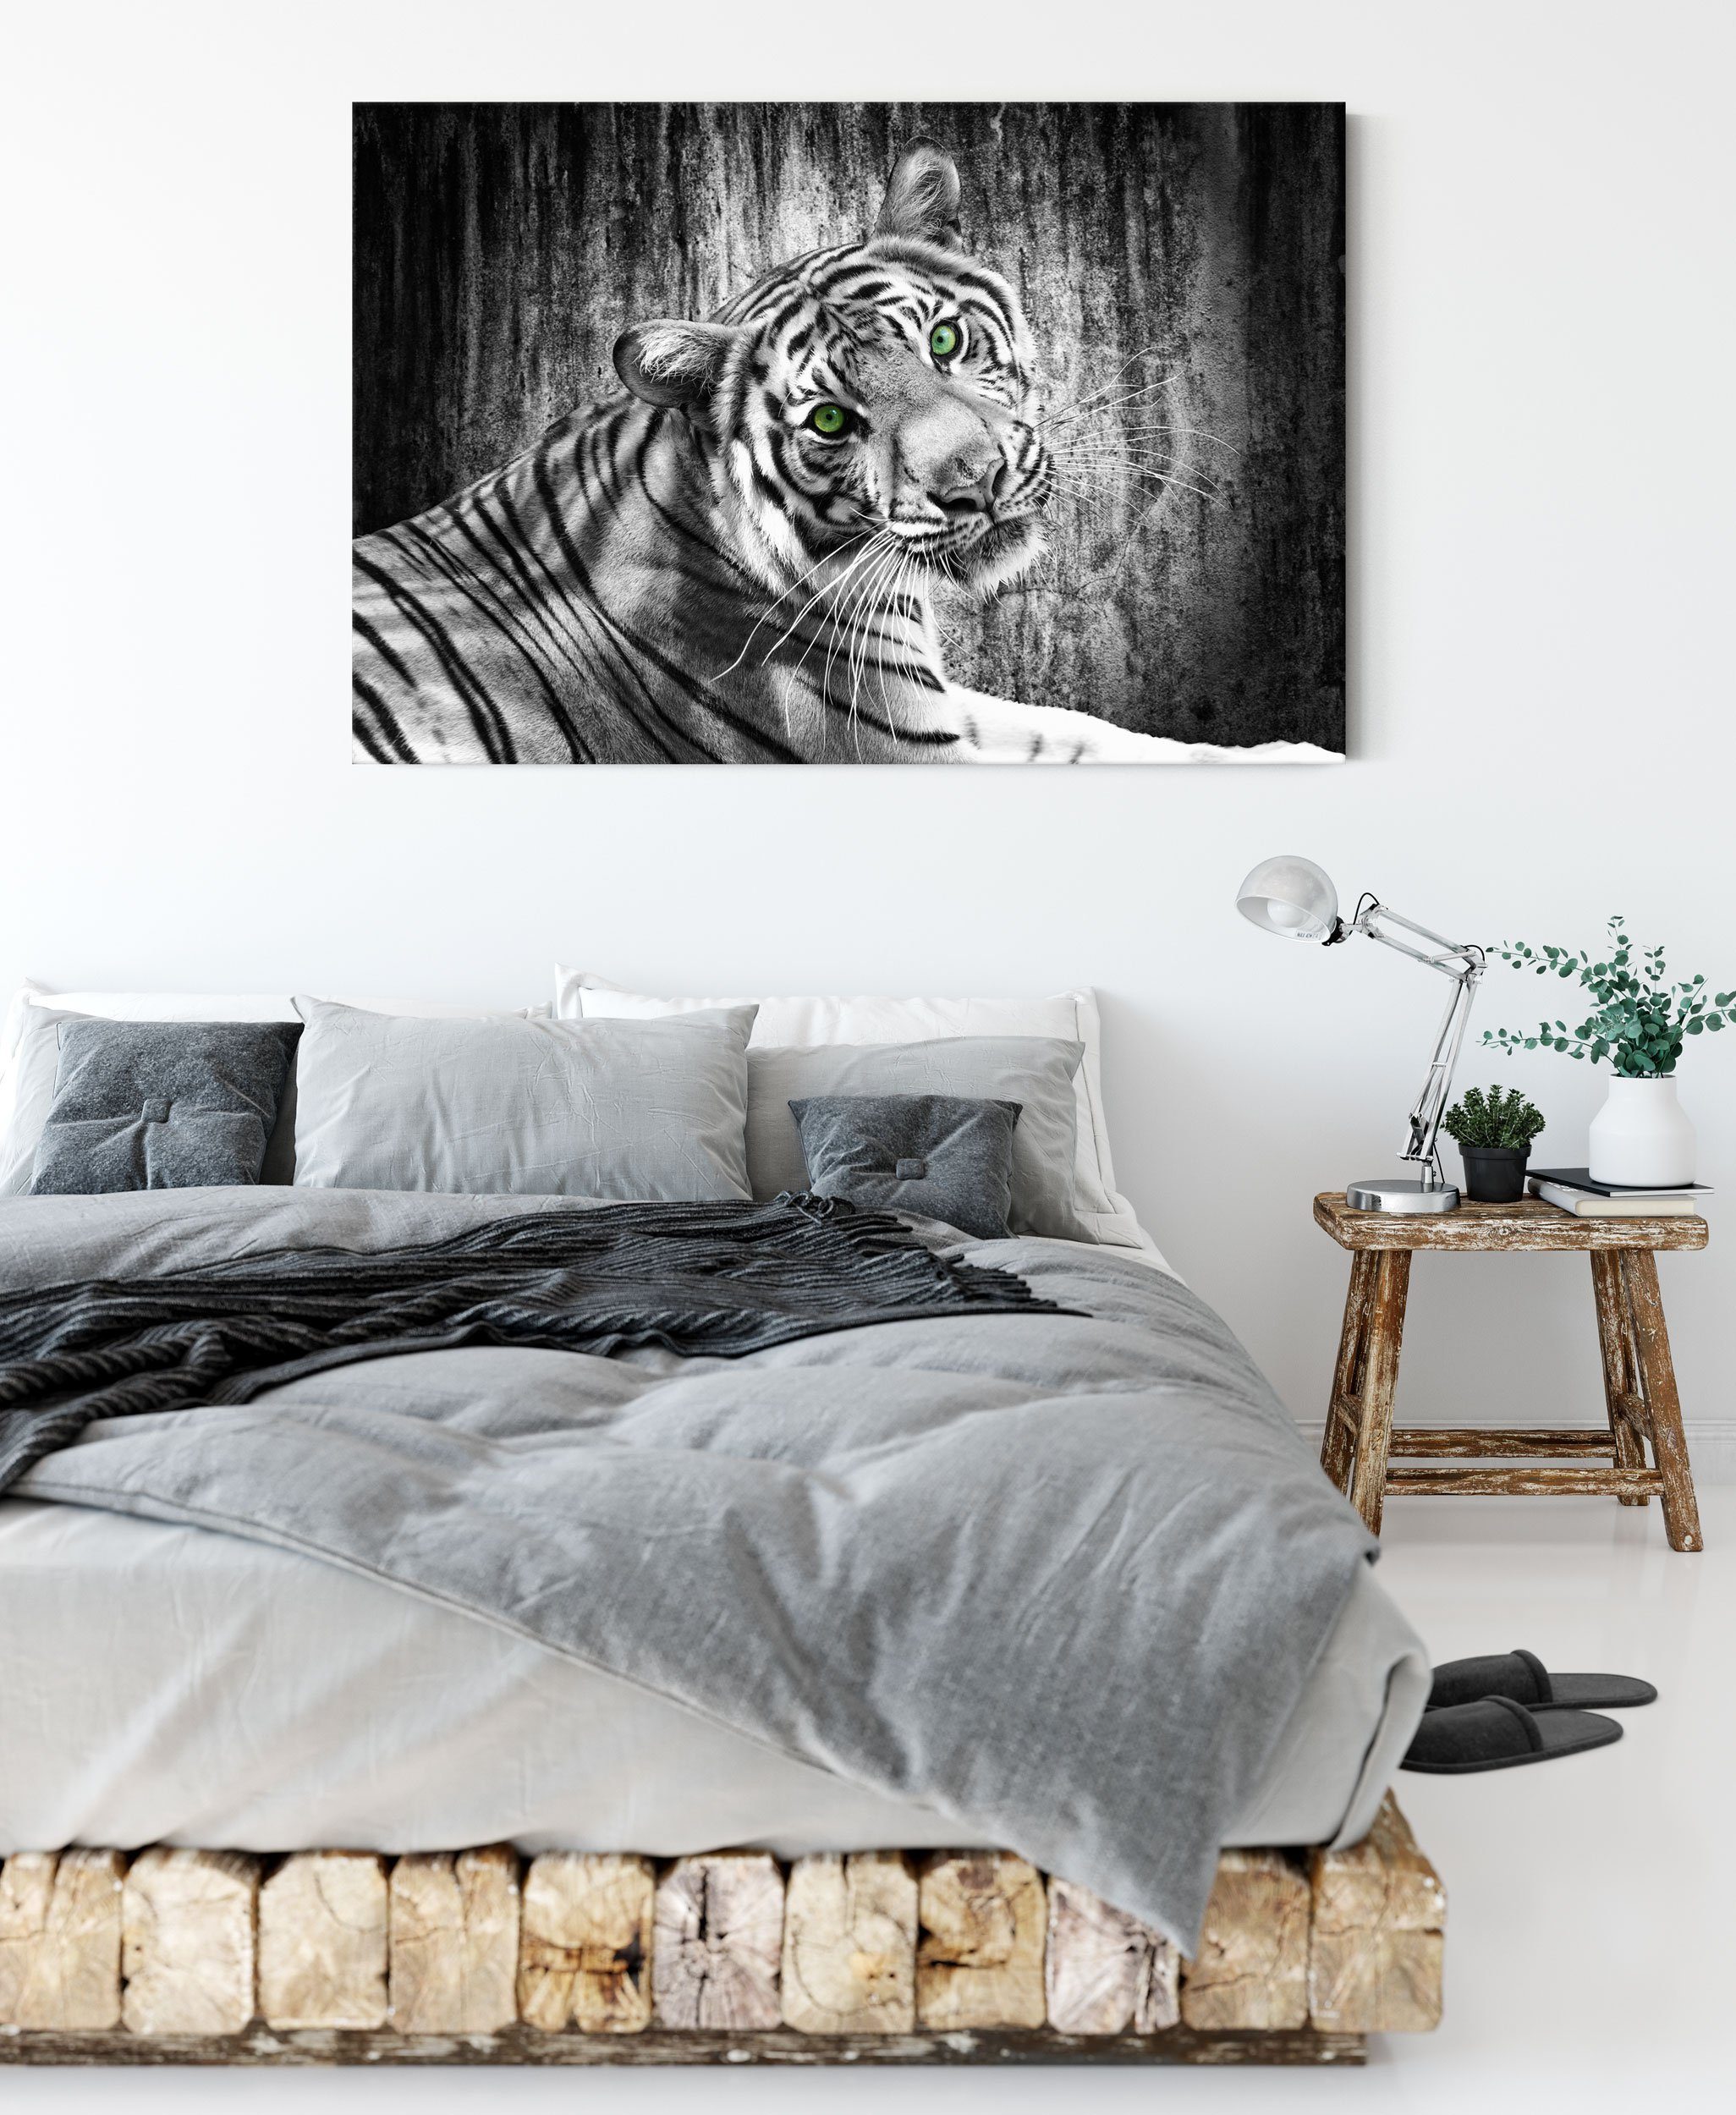 neugieriger bespannt, Leinwandbild Leinwandbild Tiger, Tiger St), schöner schöner (1 neugieriger Pixxprint inkl. Zackenaufhänger fertig